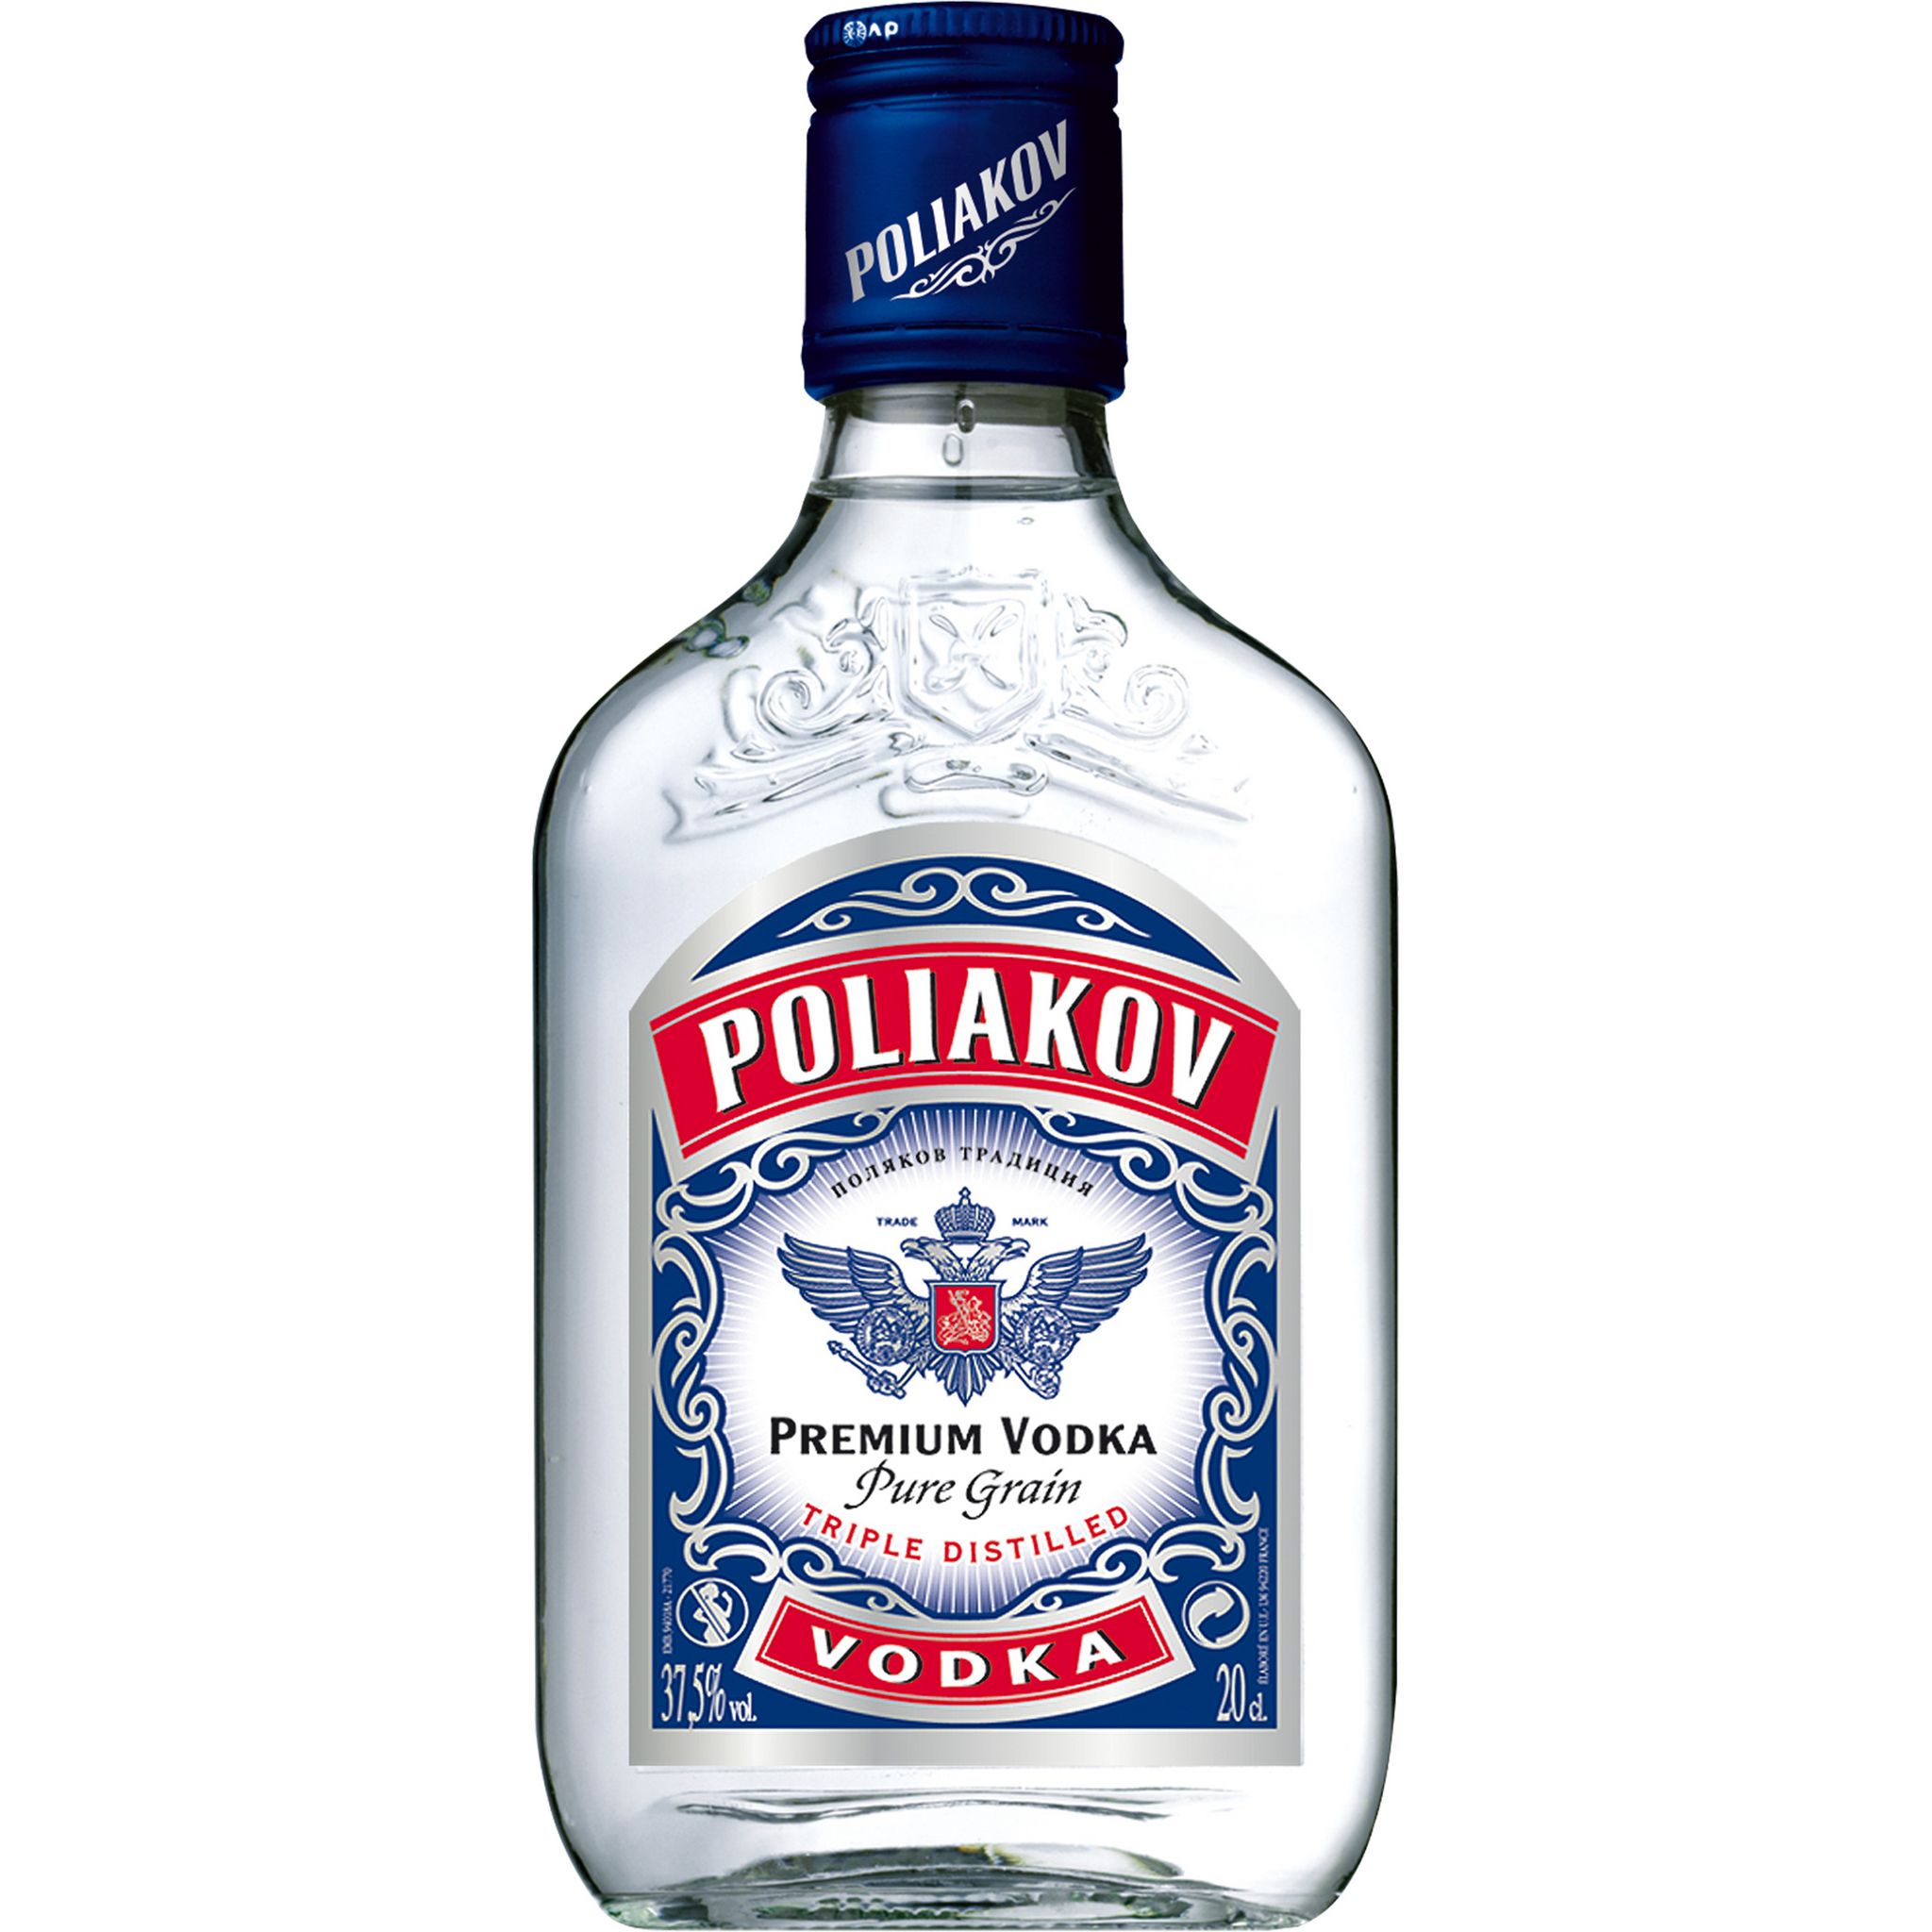 Where to buy Poliakov Premium Vodka, France